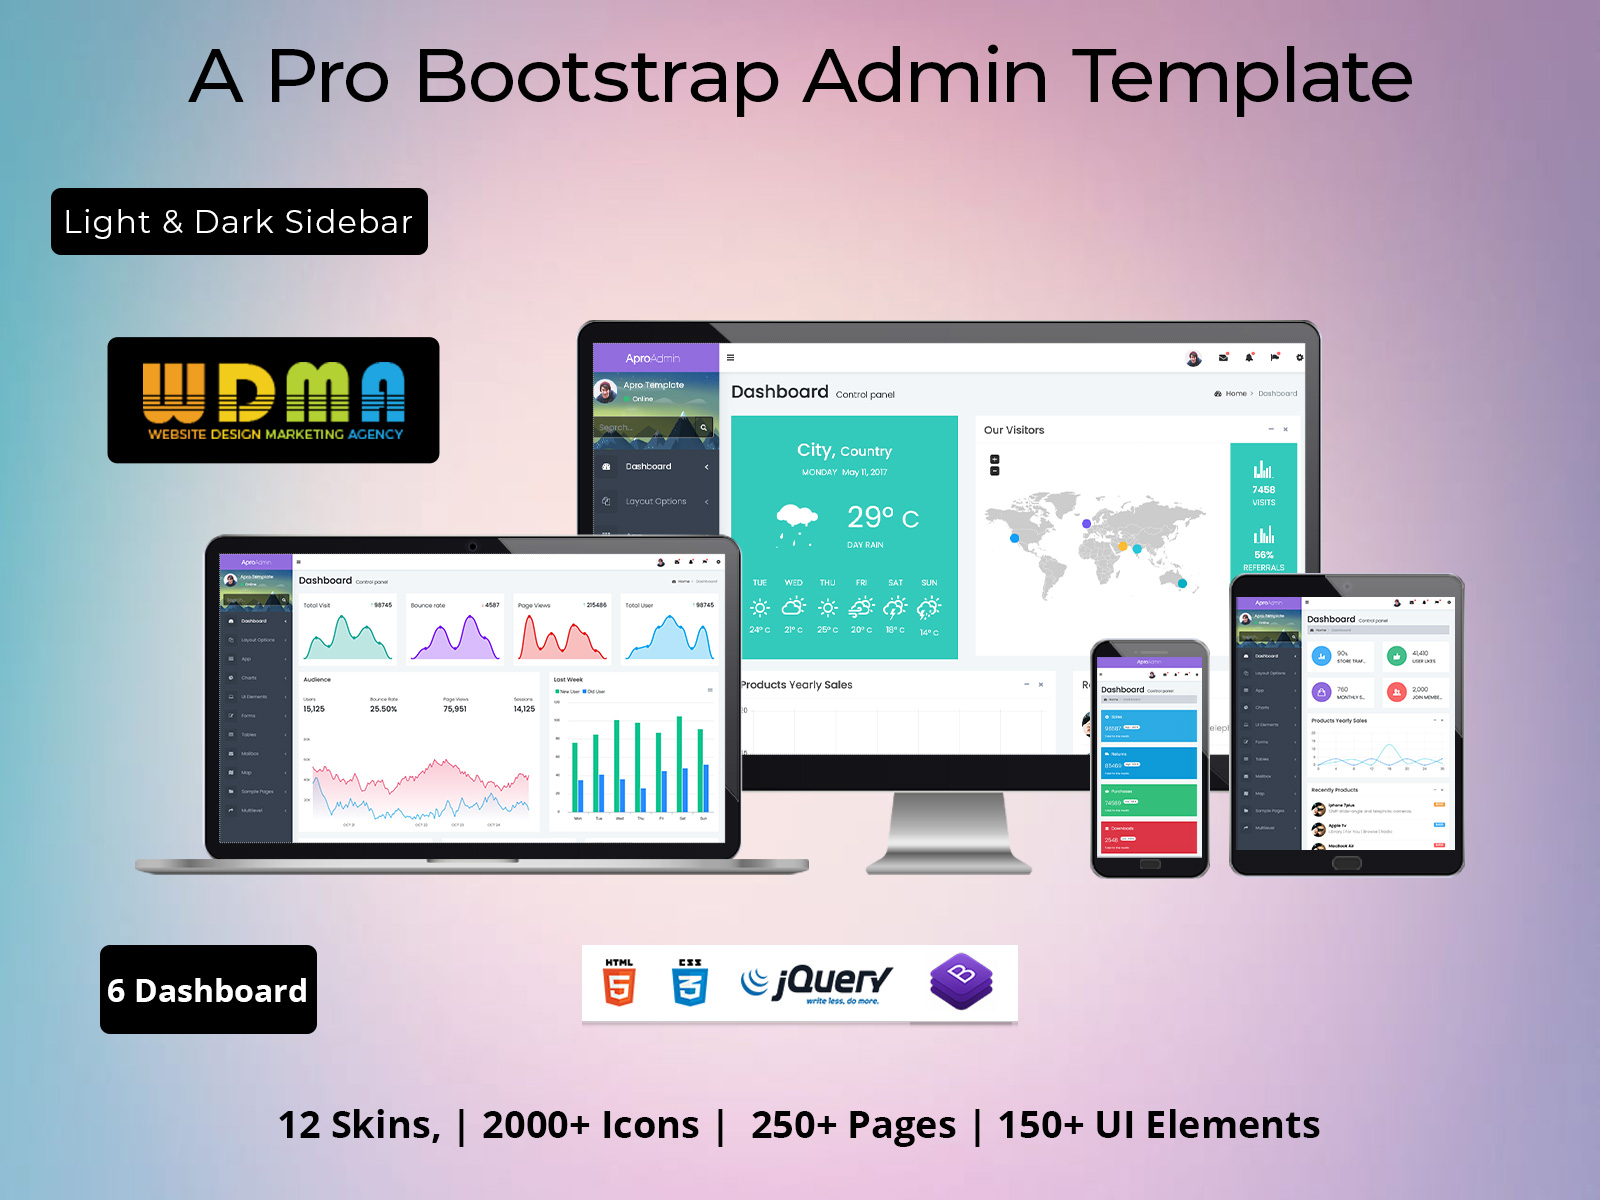 A Pro Bootstrap Admin Dashboard – Improve Your Strategic Decision-Making